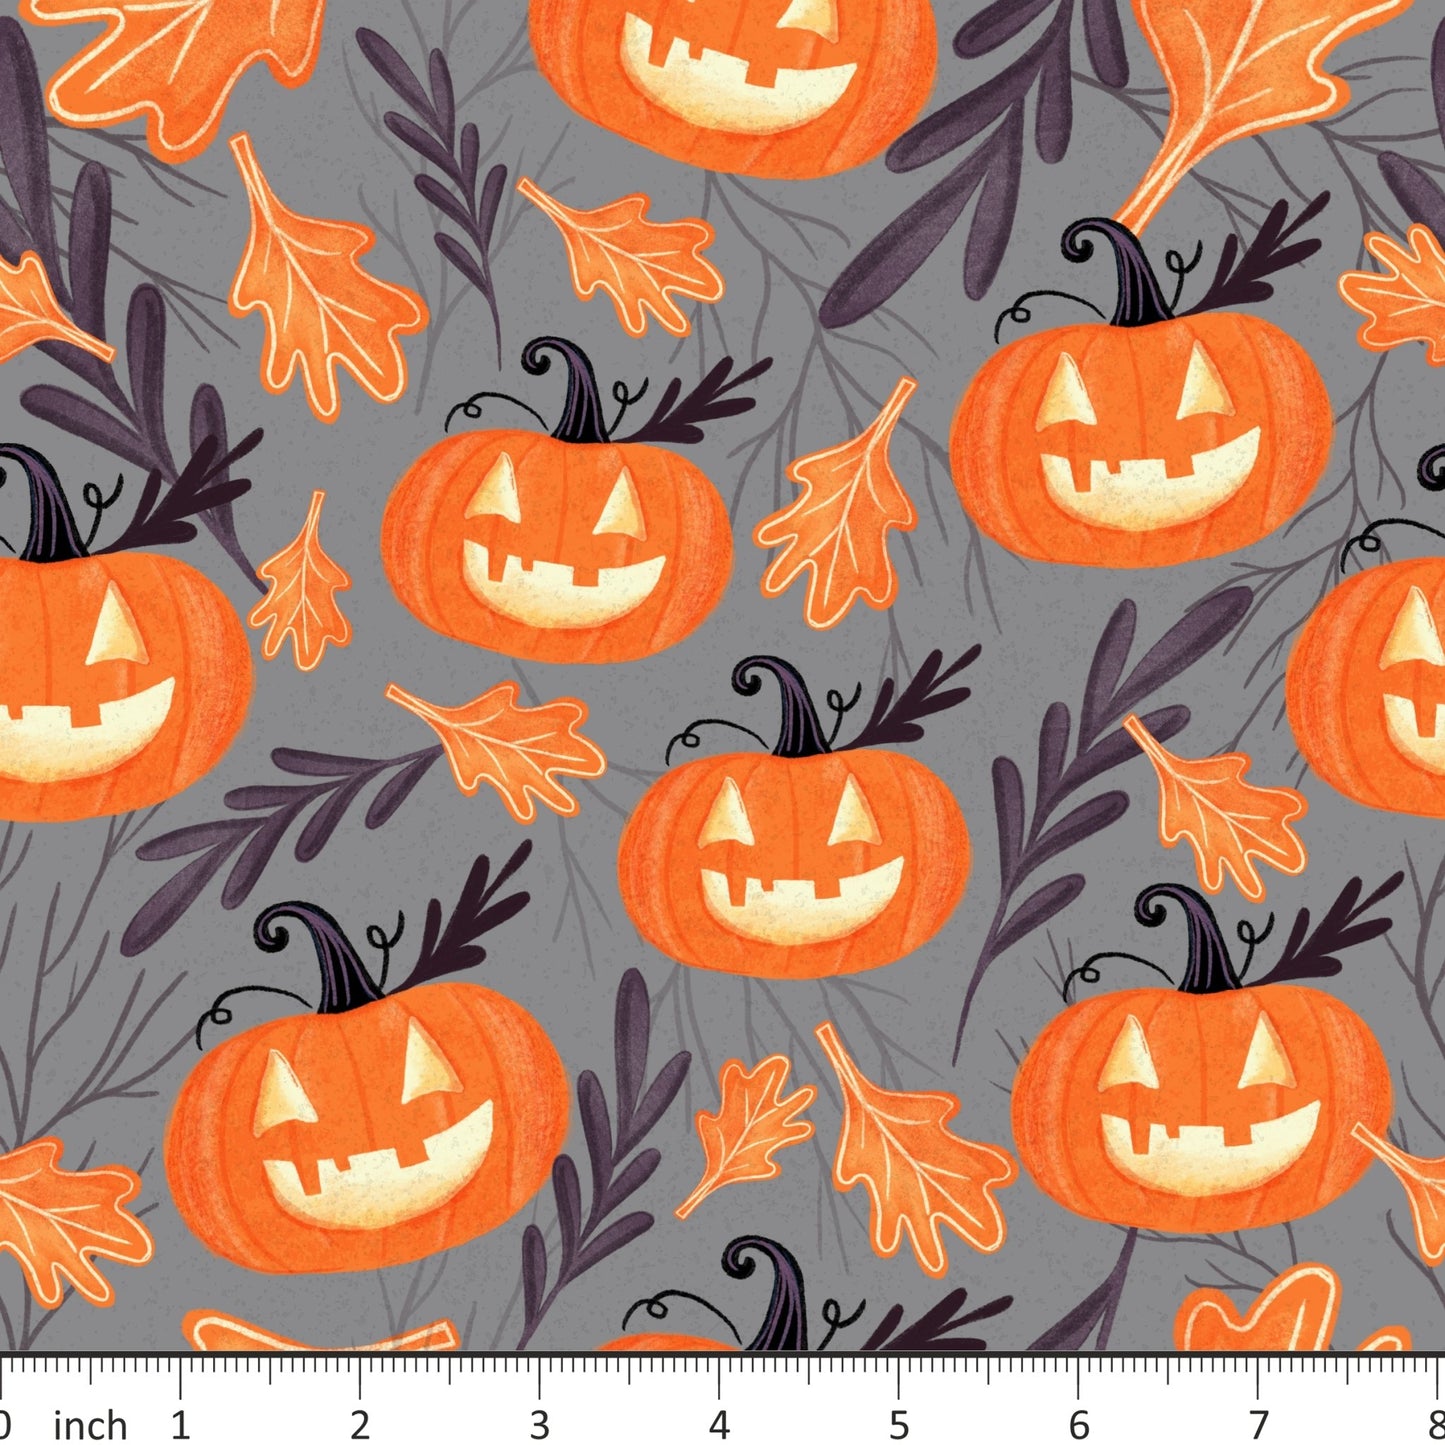 FineapplePair - Pumpkins on Grey - Little Rhody Sewing Co.